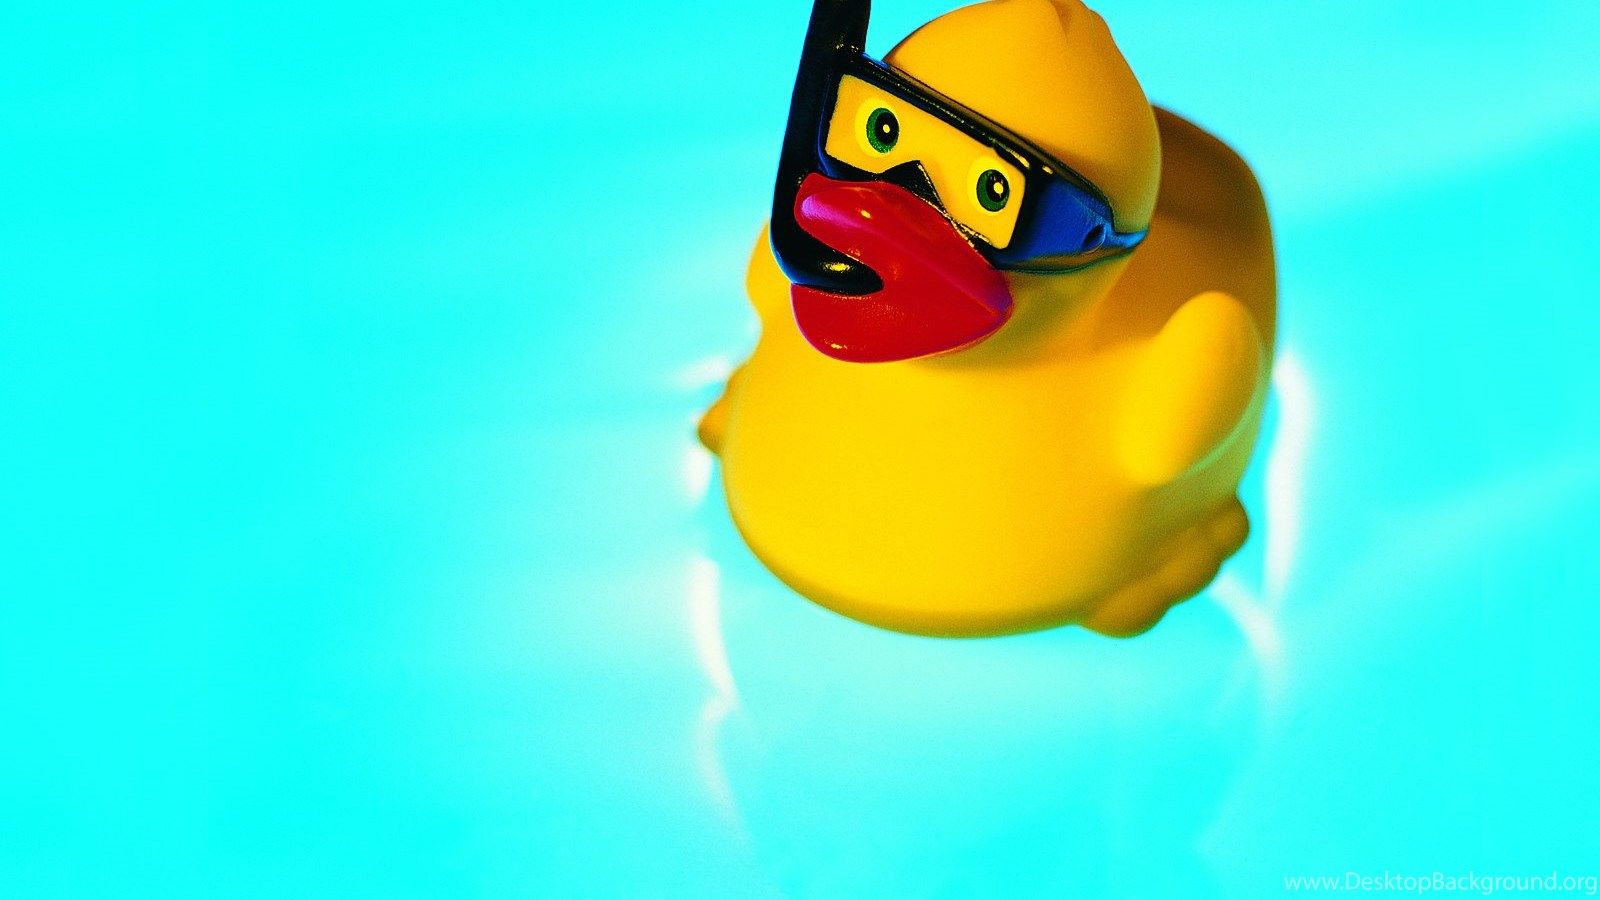 Cute Animals Wallpaper, A Little Rubber Duck In Swim, The Blue Sea. Desktop Background